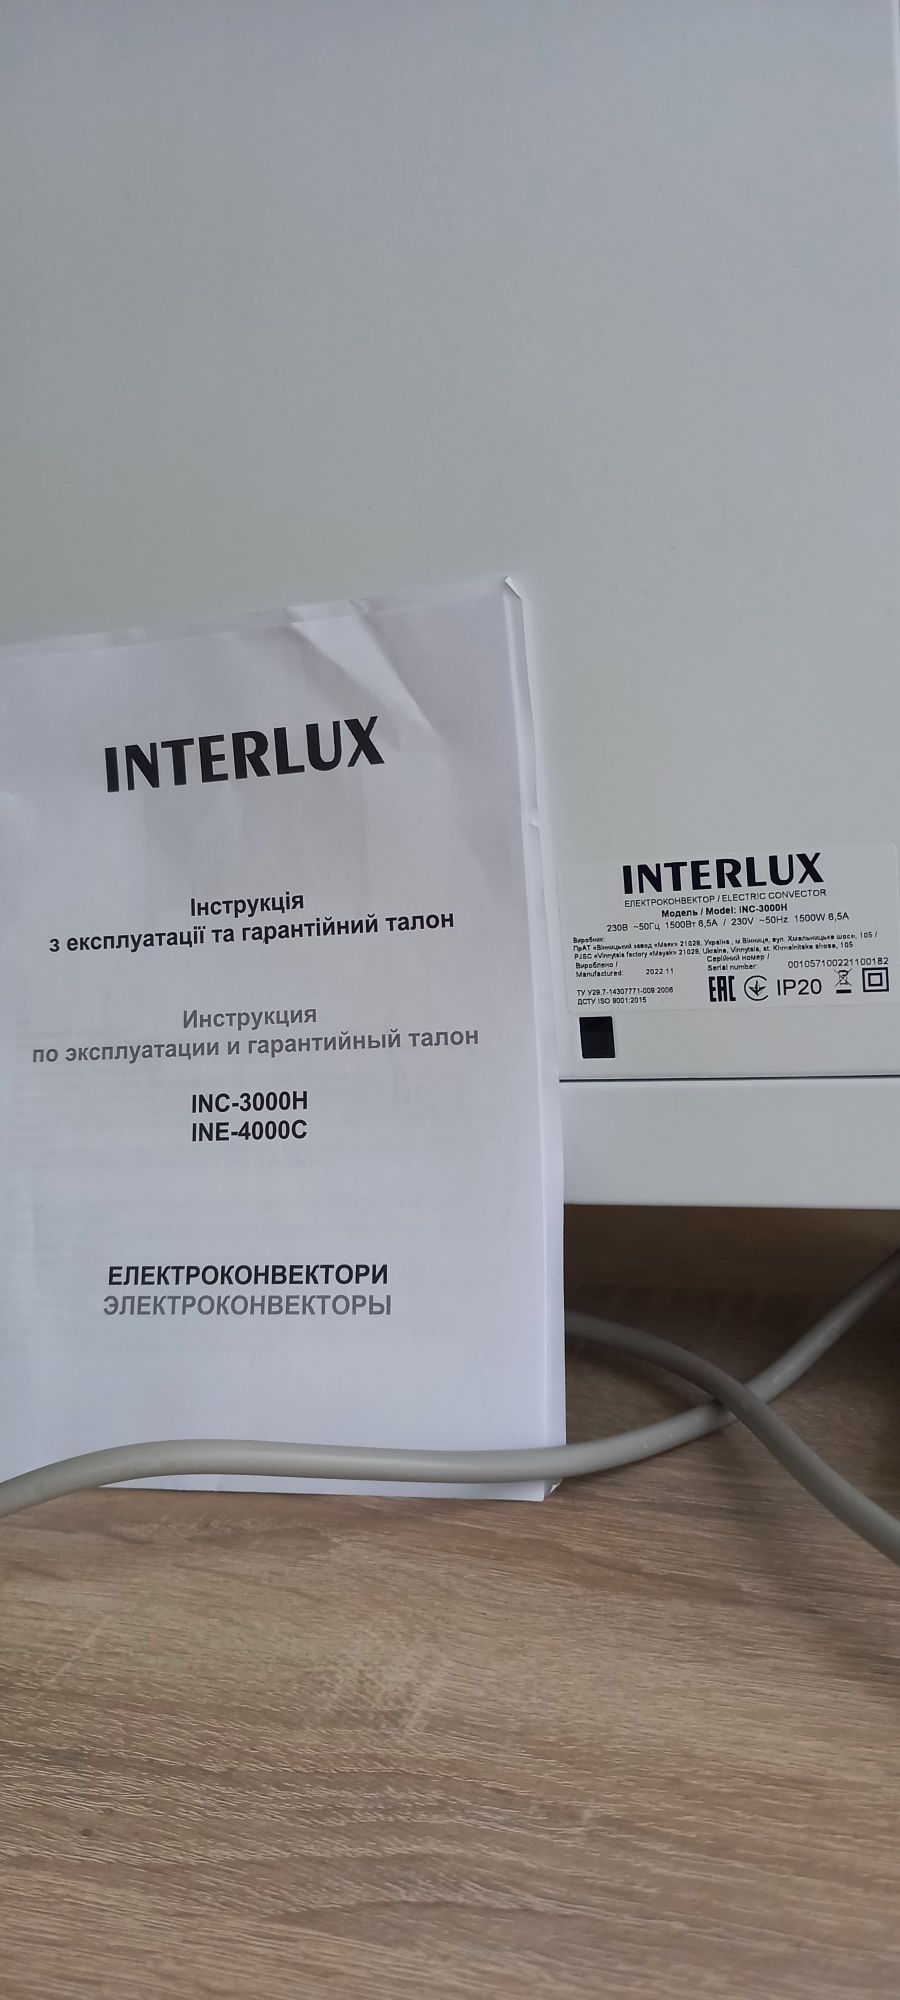 Конвектор INTERLUX INC-300H 1500 Вт